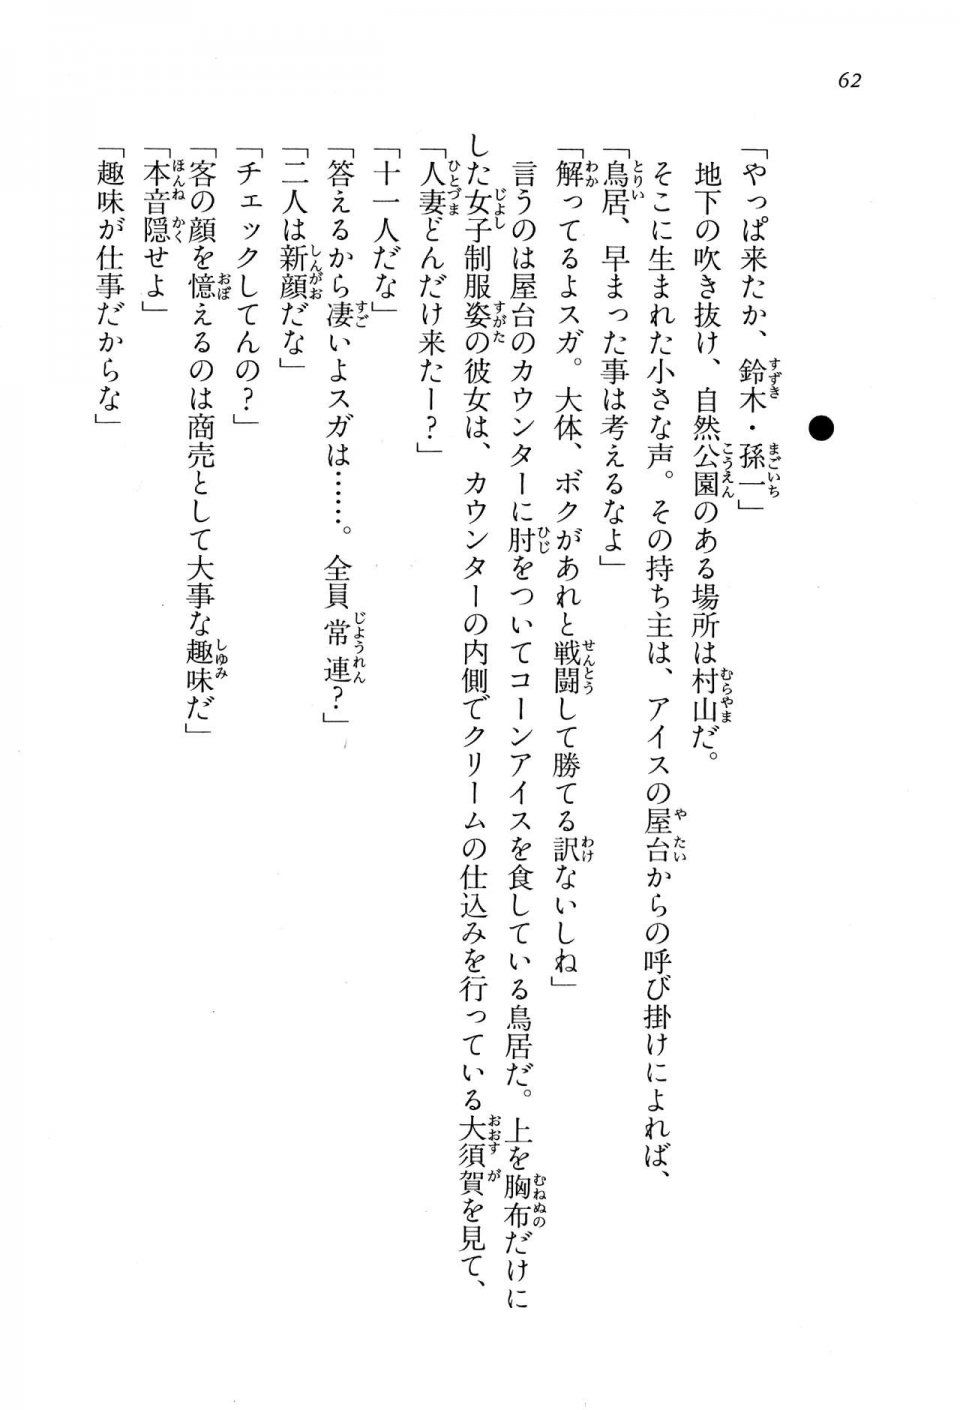 Kyoukai Senjou no Horizon BD Special Mininovel Vol 6(3B) - Photo #66